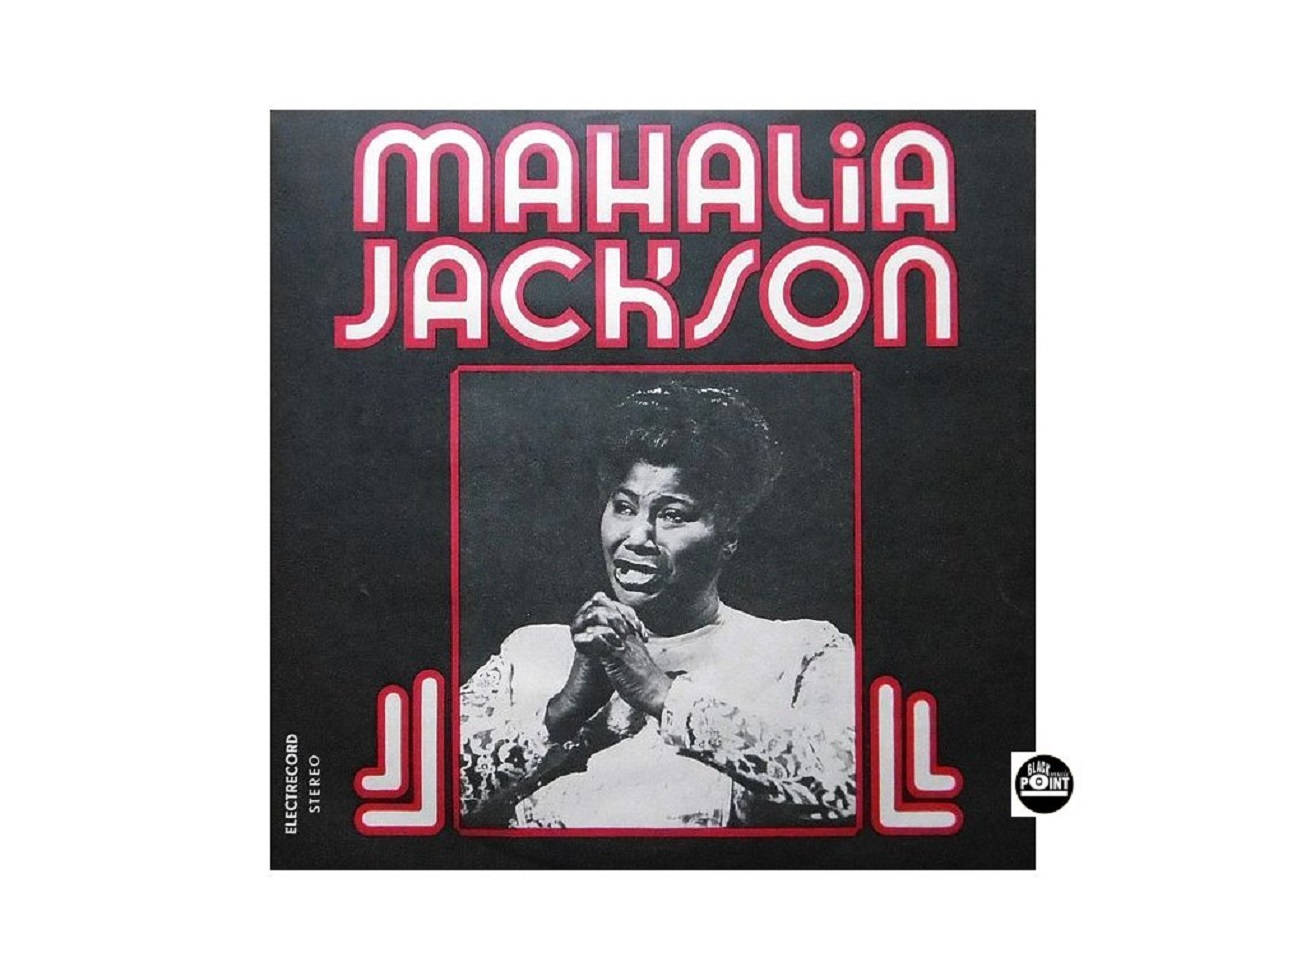 Gospel Icon Mahalia Jackson's 1977 Album Cover Wallpaper